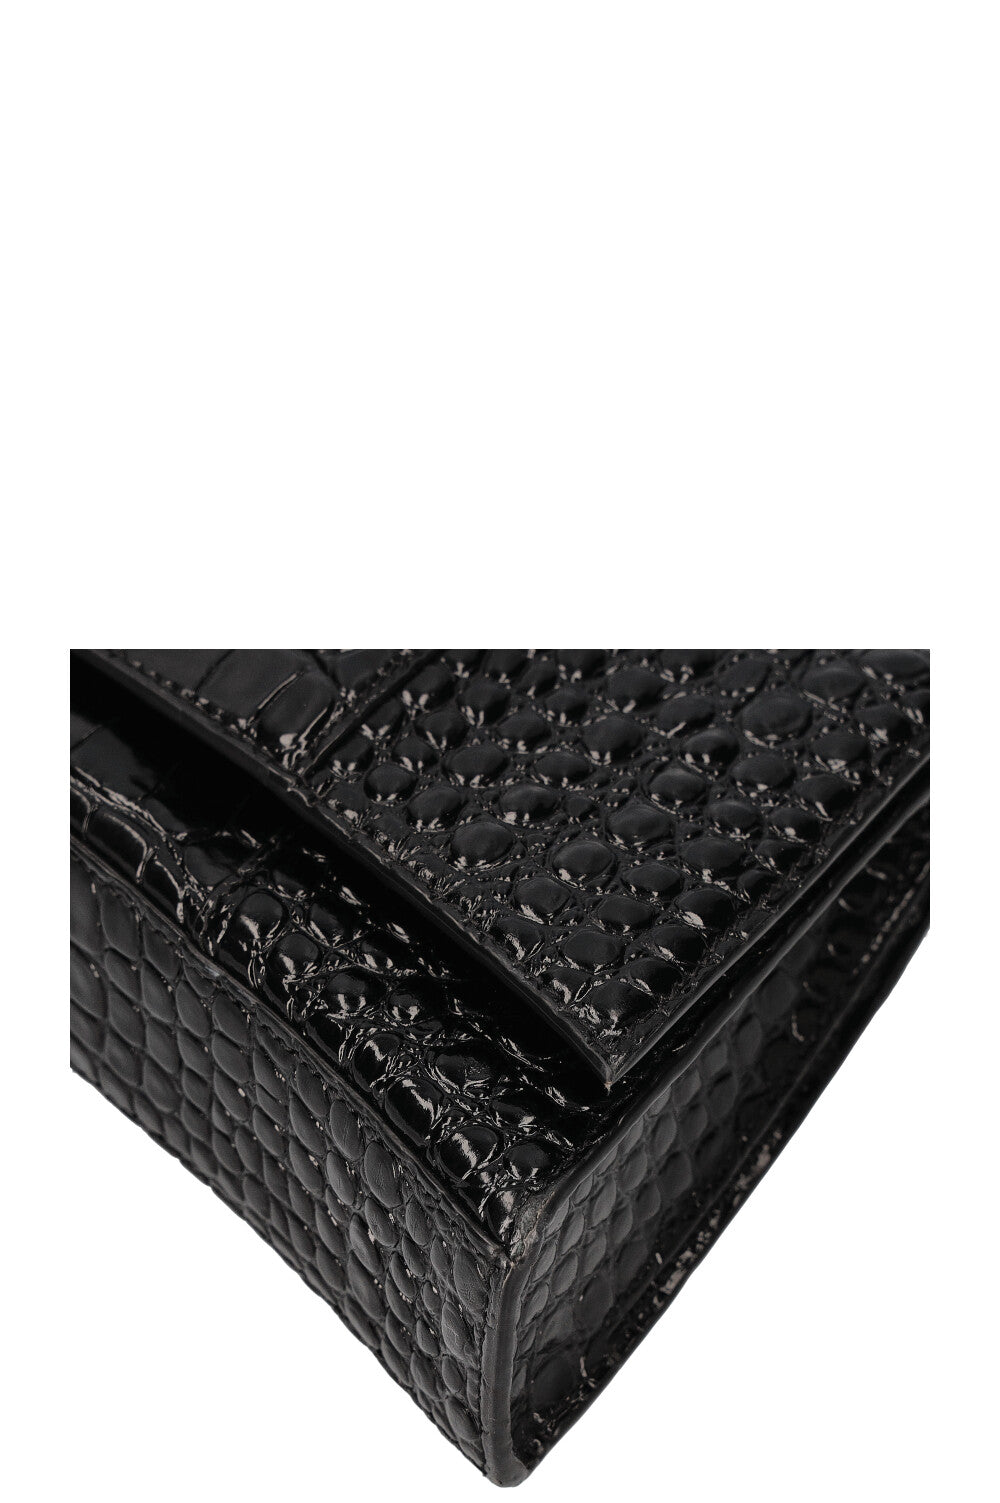 BALENCIAGA Hourglas Stretch Bag Croc Embossed Black